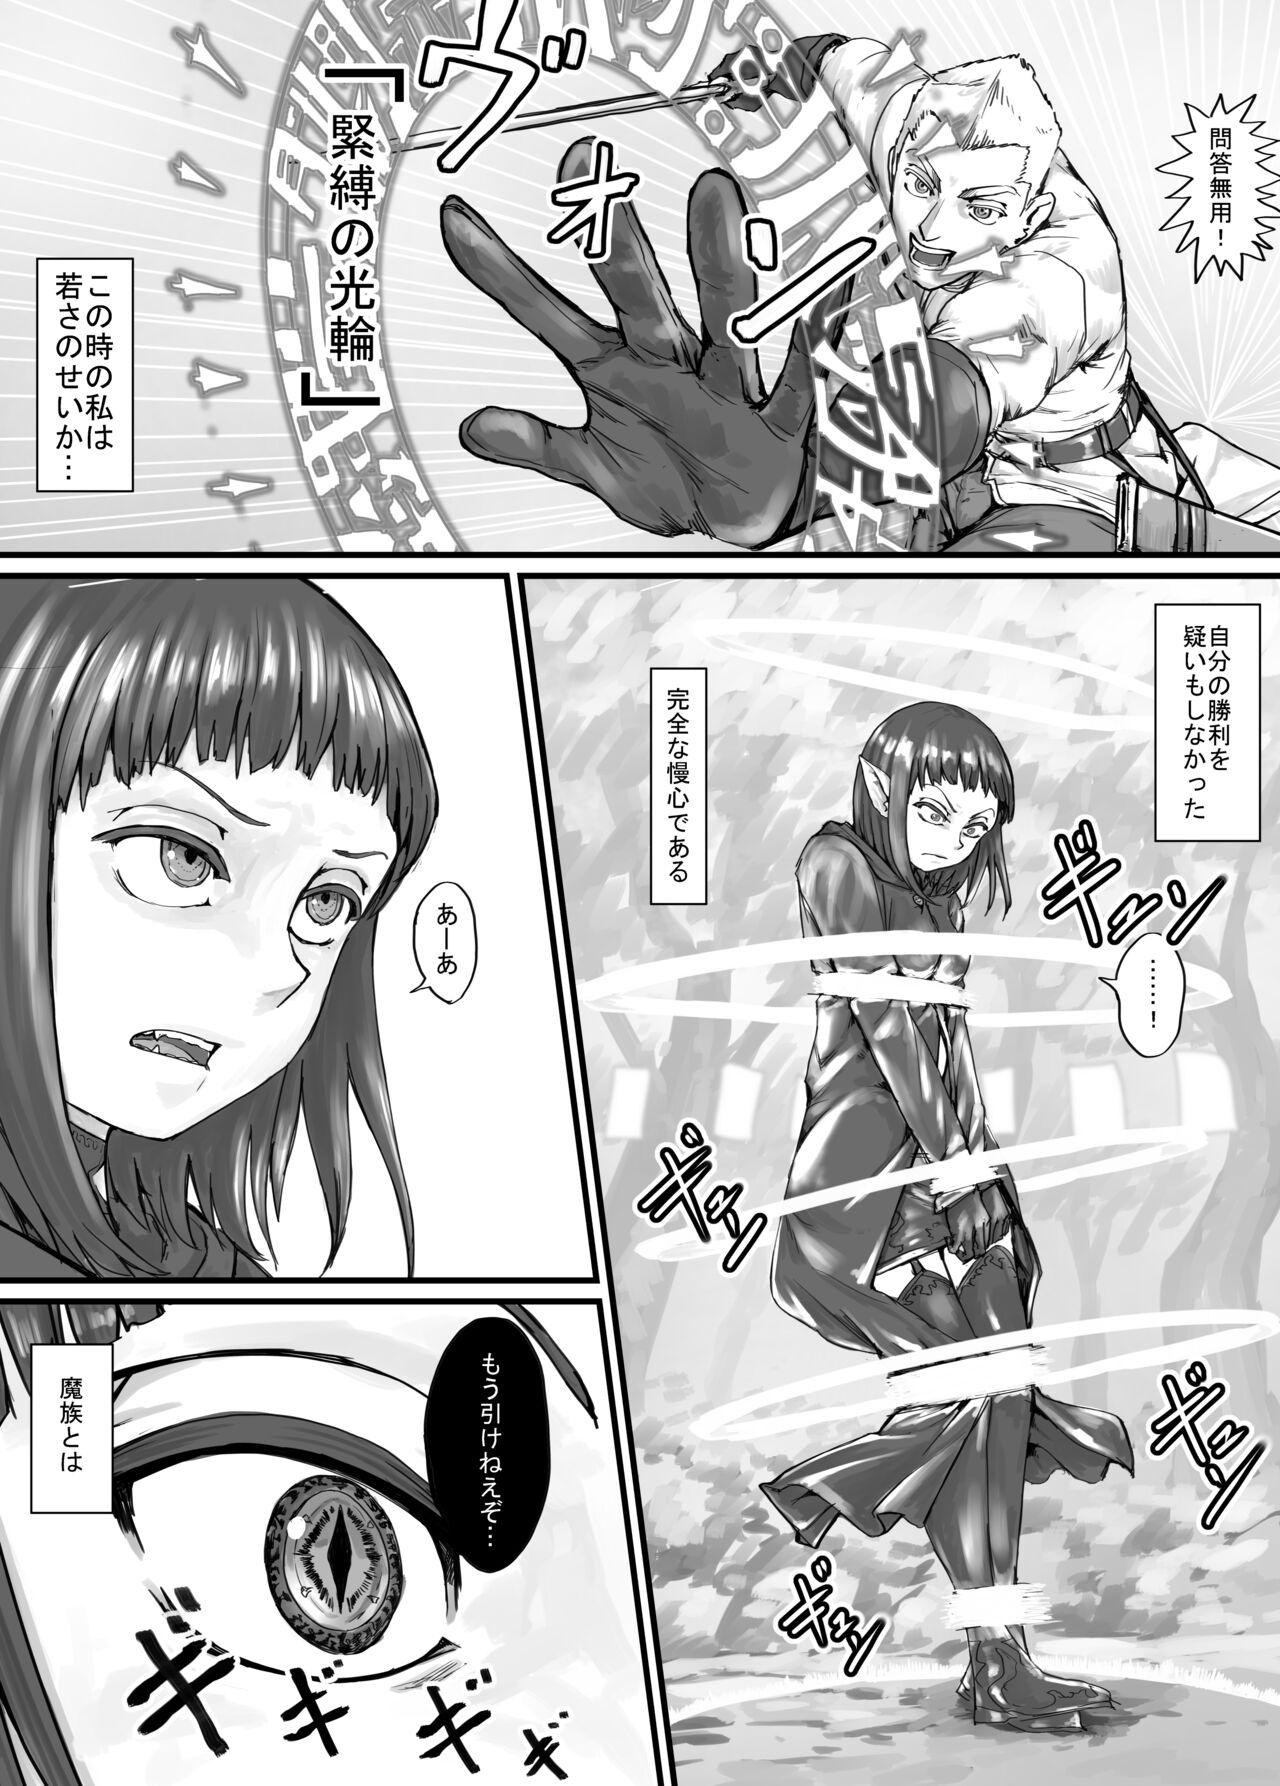 Bucetuda 魔族ちゃん漫画1 - Original X - Page 6